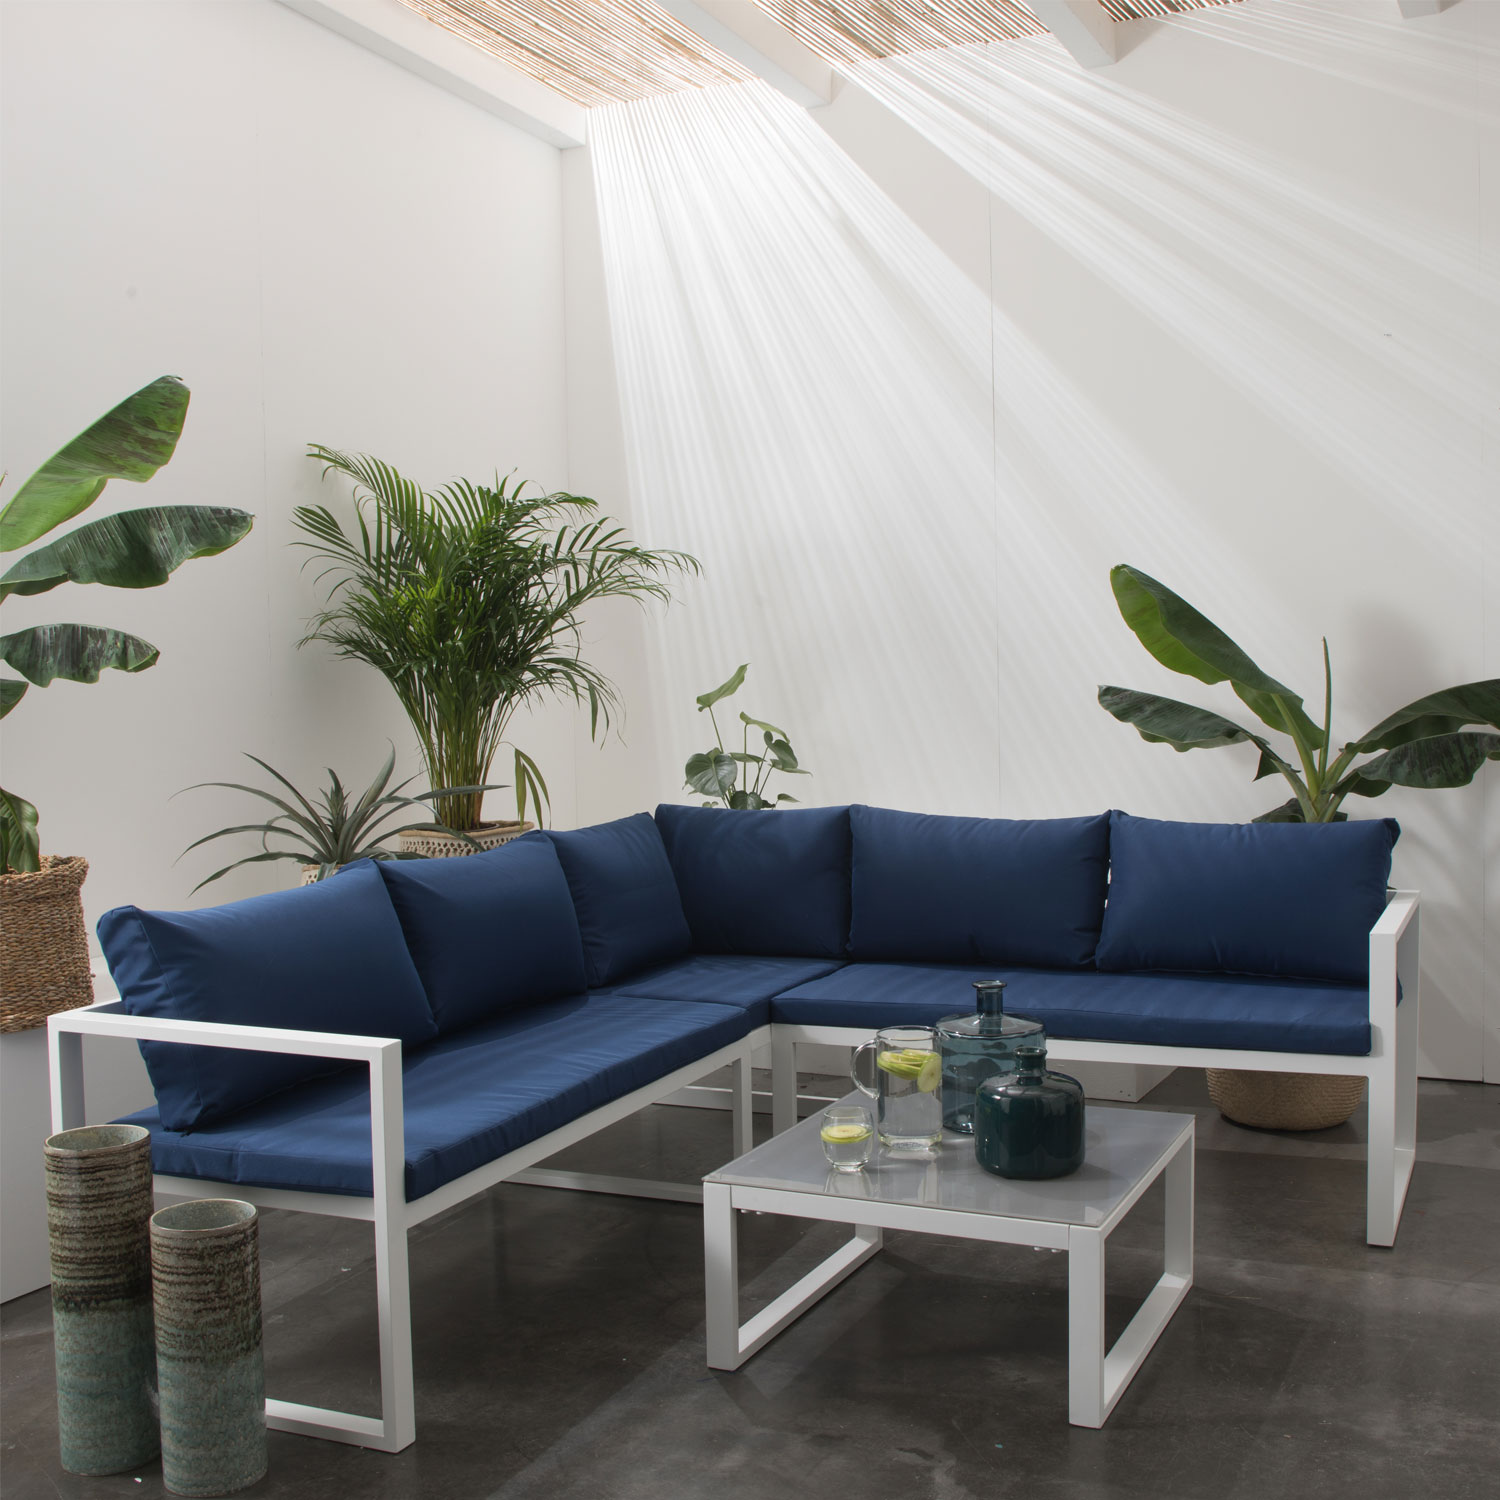 Set di mobili da giardino modulari IBIZA in tessuto blu 4 posti - alluminio bianco